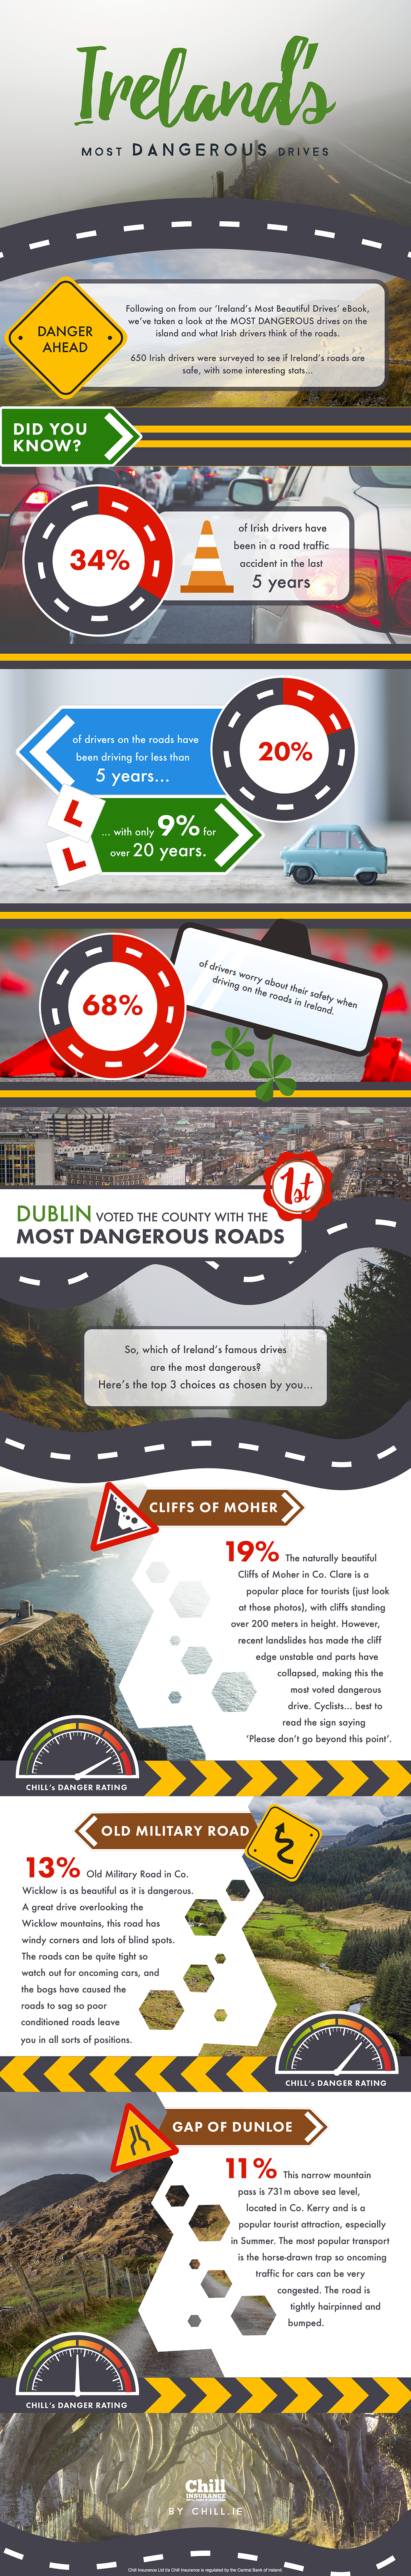 dangerous drives infographic